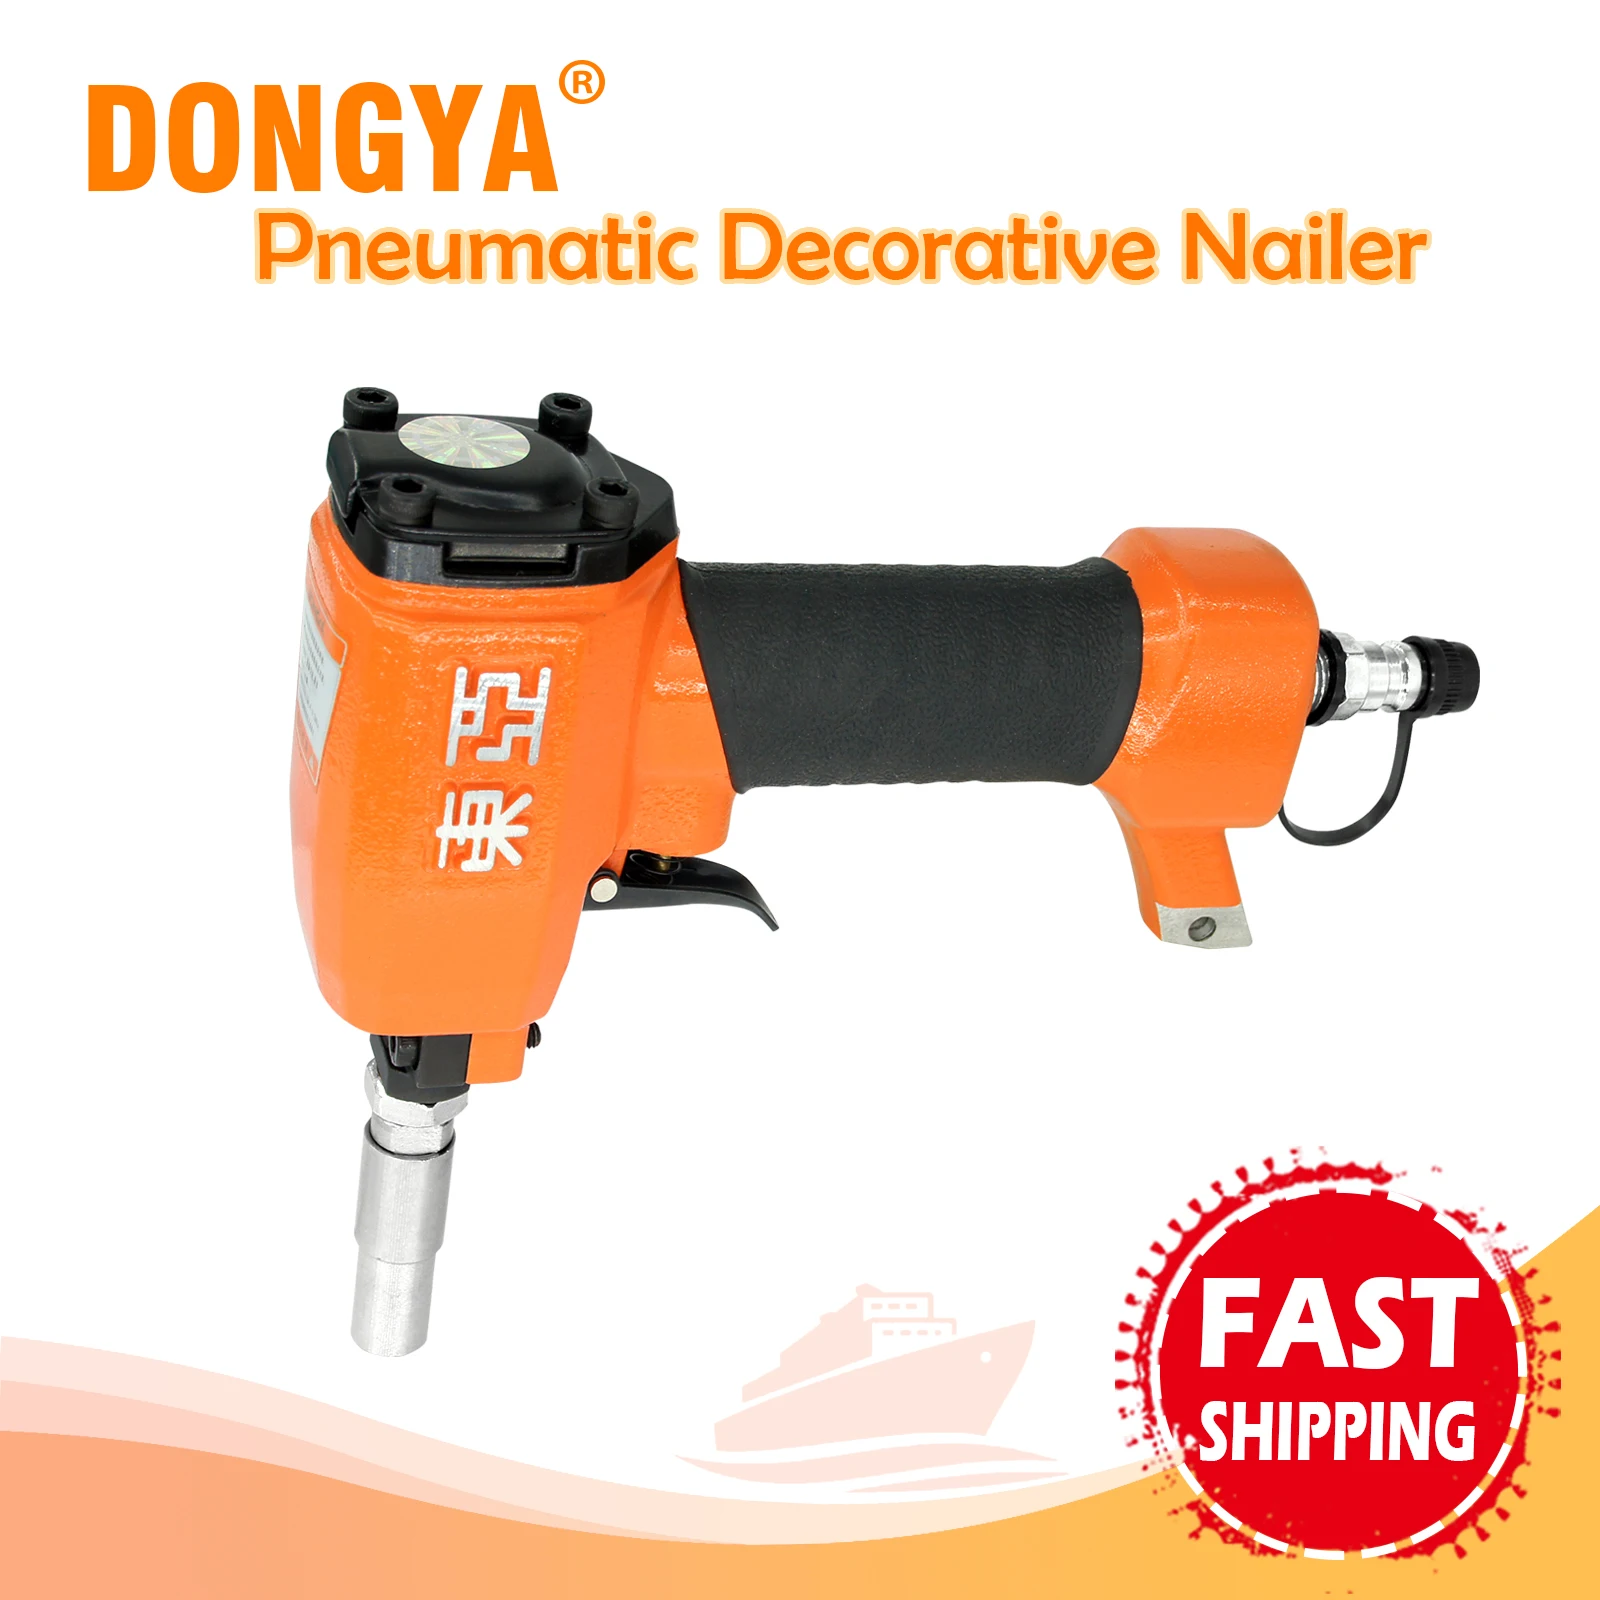 Dongya 1170 Pneumatic Decorative Nailer, Air Upholstery Tacks Gun, Power Finish Nailer for Furniture Tacks, Used in Upholstering